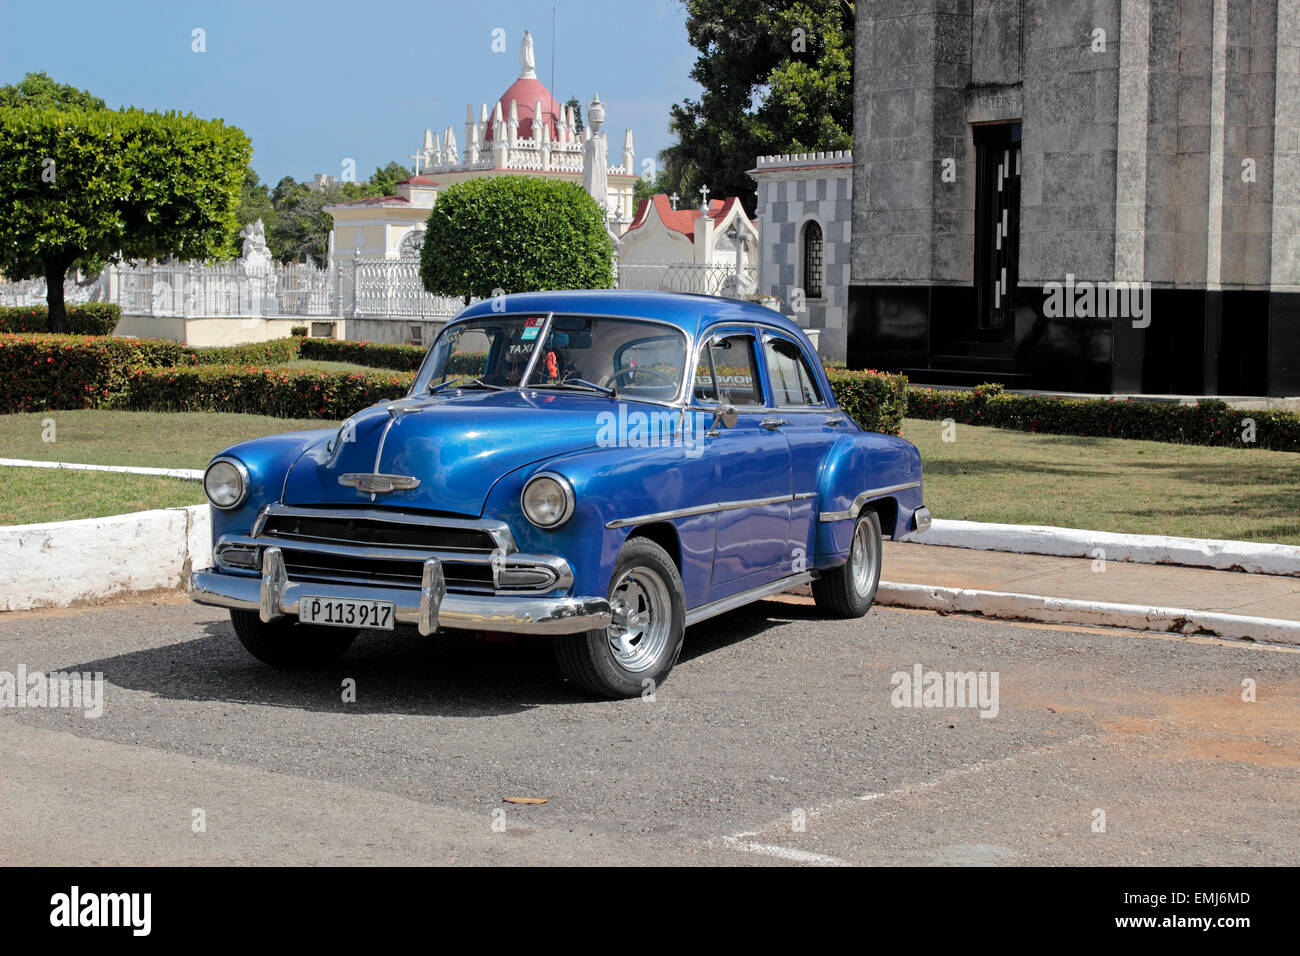 1950's era American Chevrolet auto at Havana Cuba Stock Photo